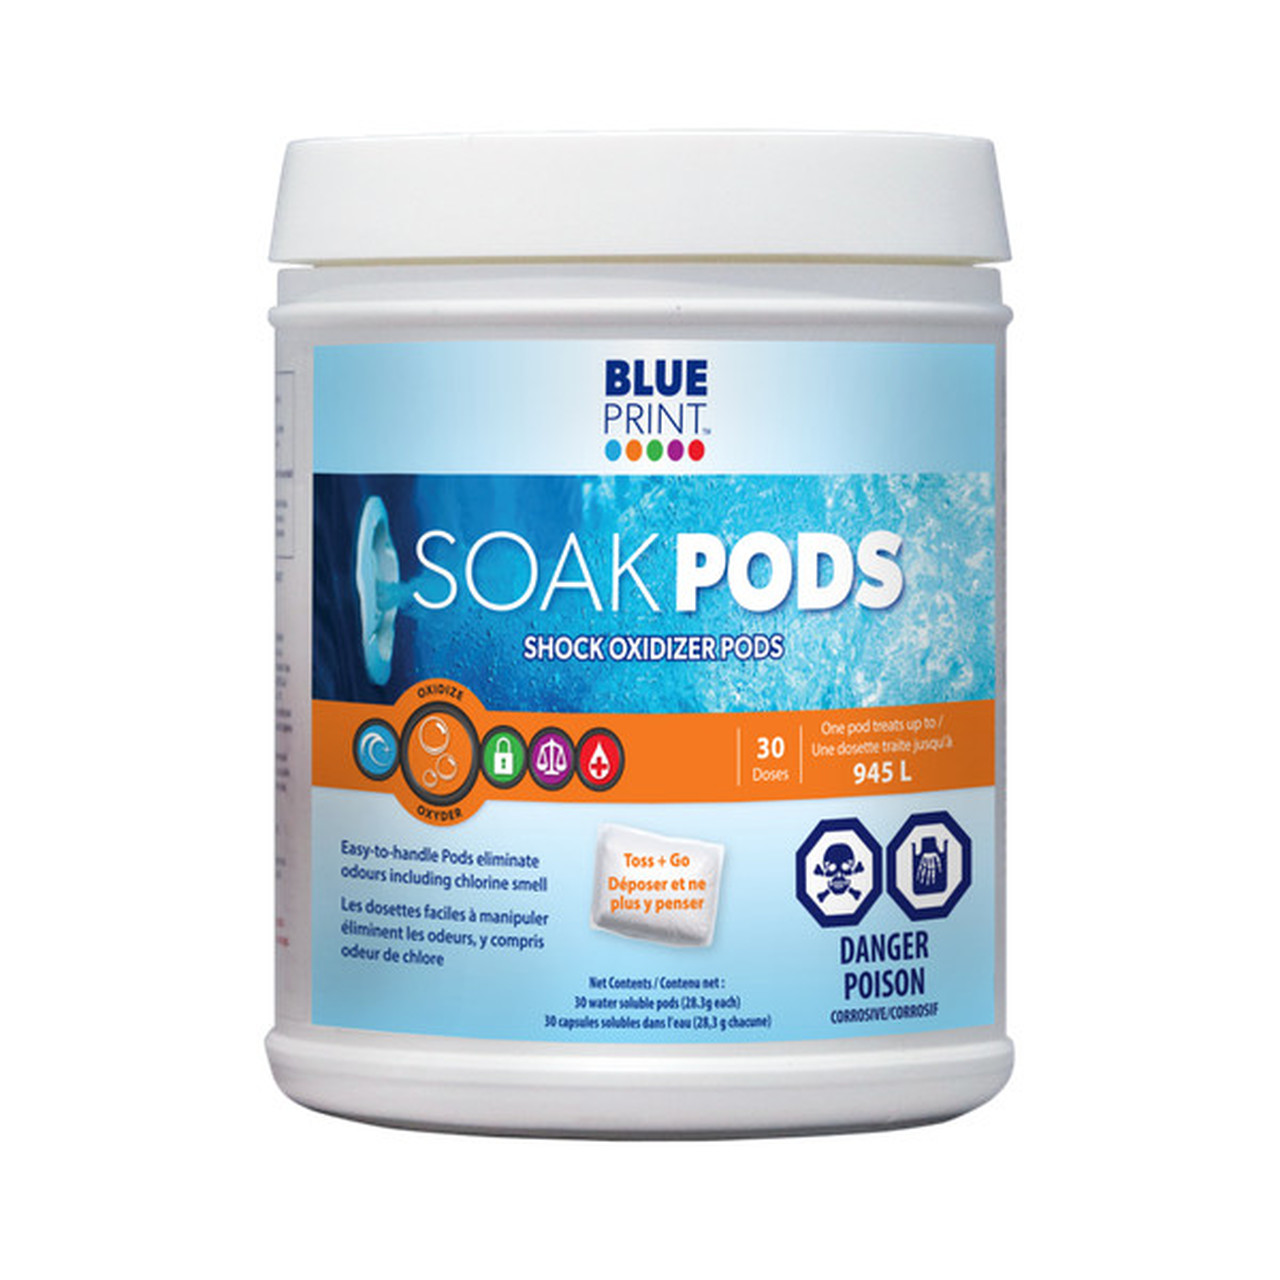 Soak Pods - shock oxidizer pod - 30 pak